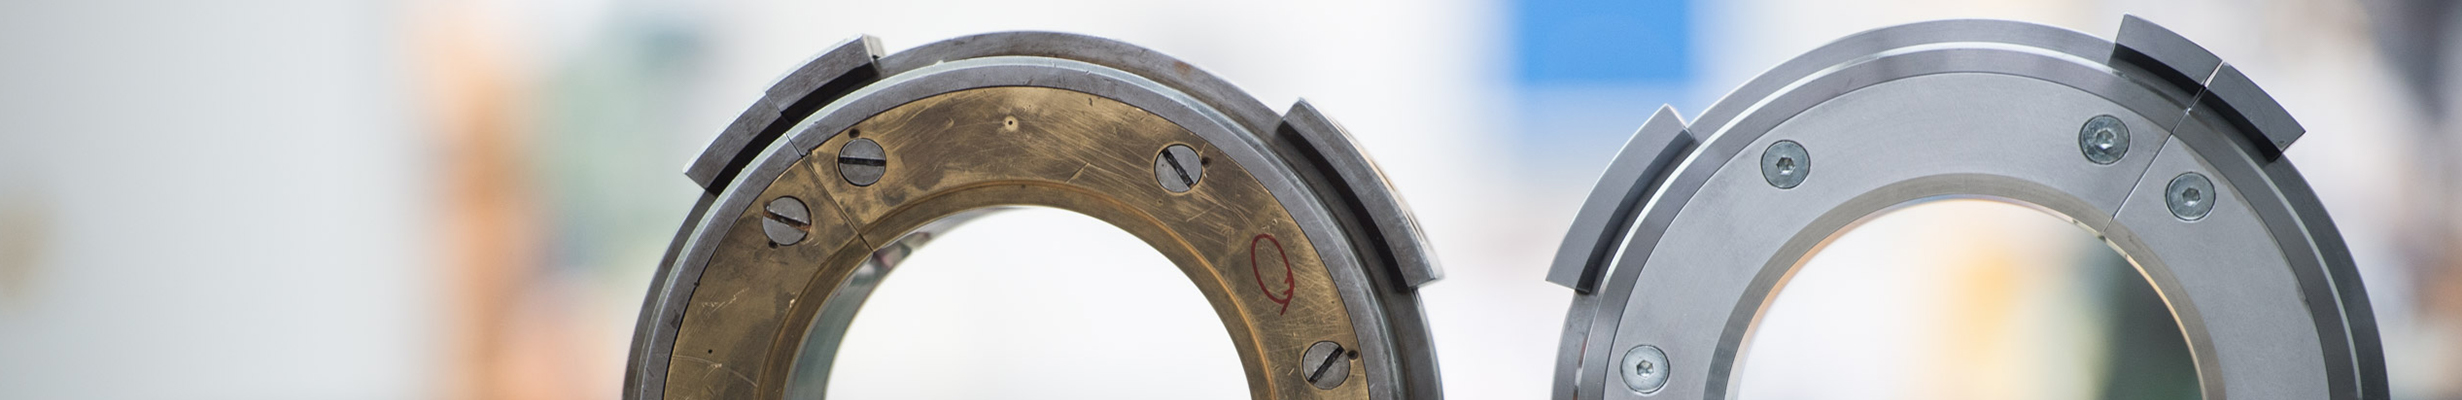 Edelmann plain bearings custom-made